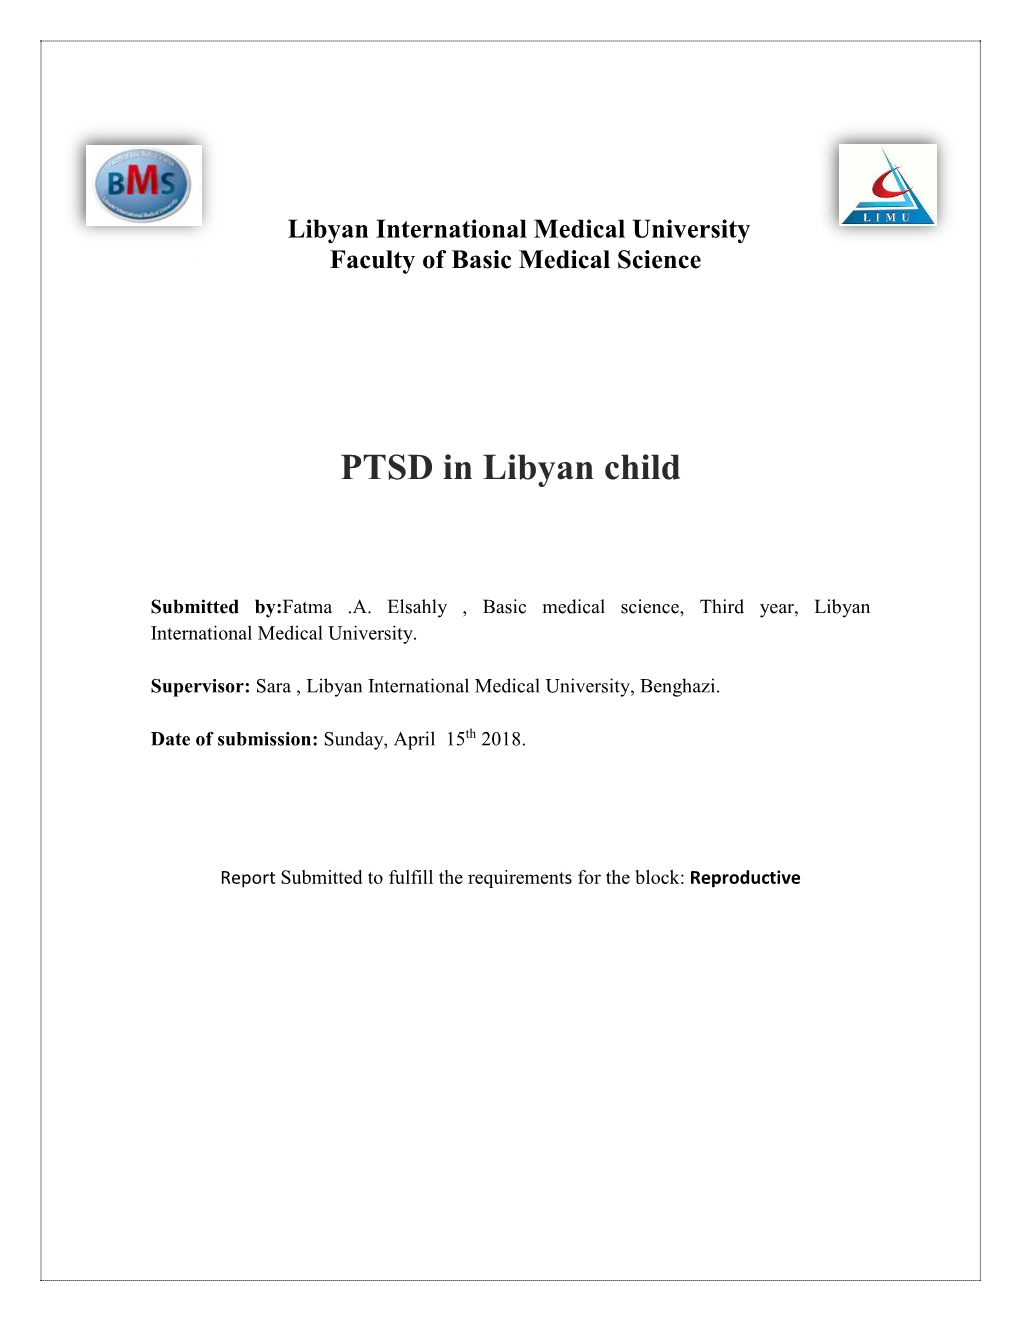 PTSD in Libyan Child